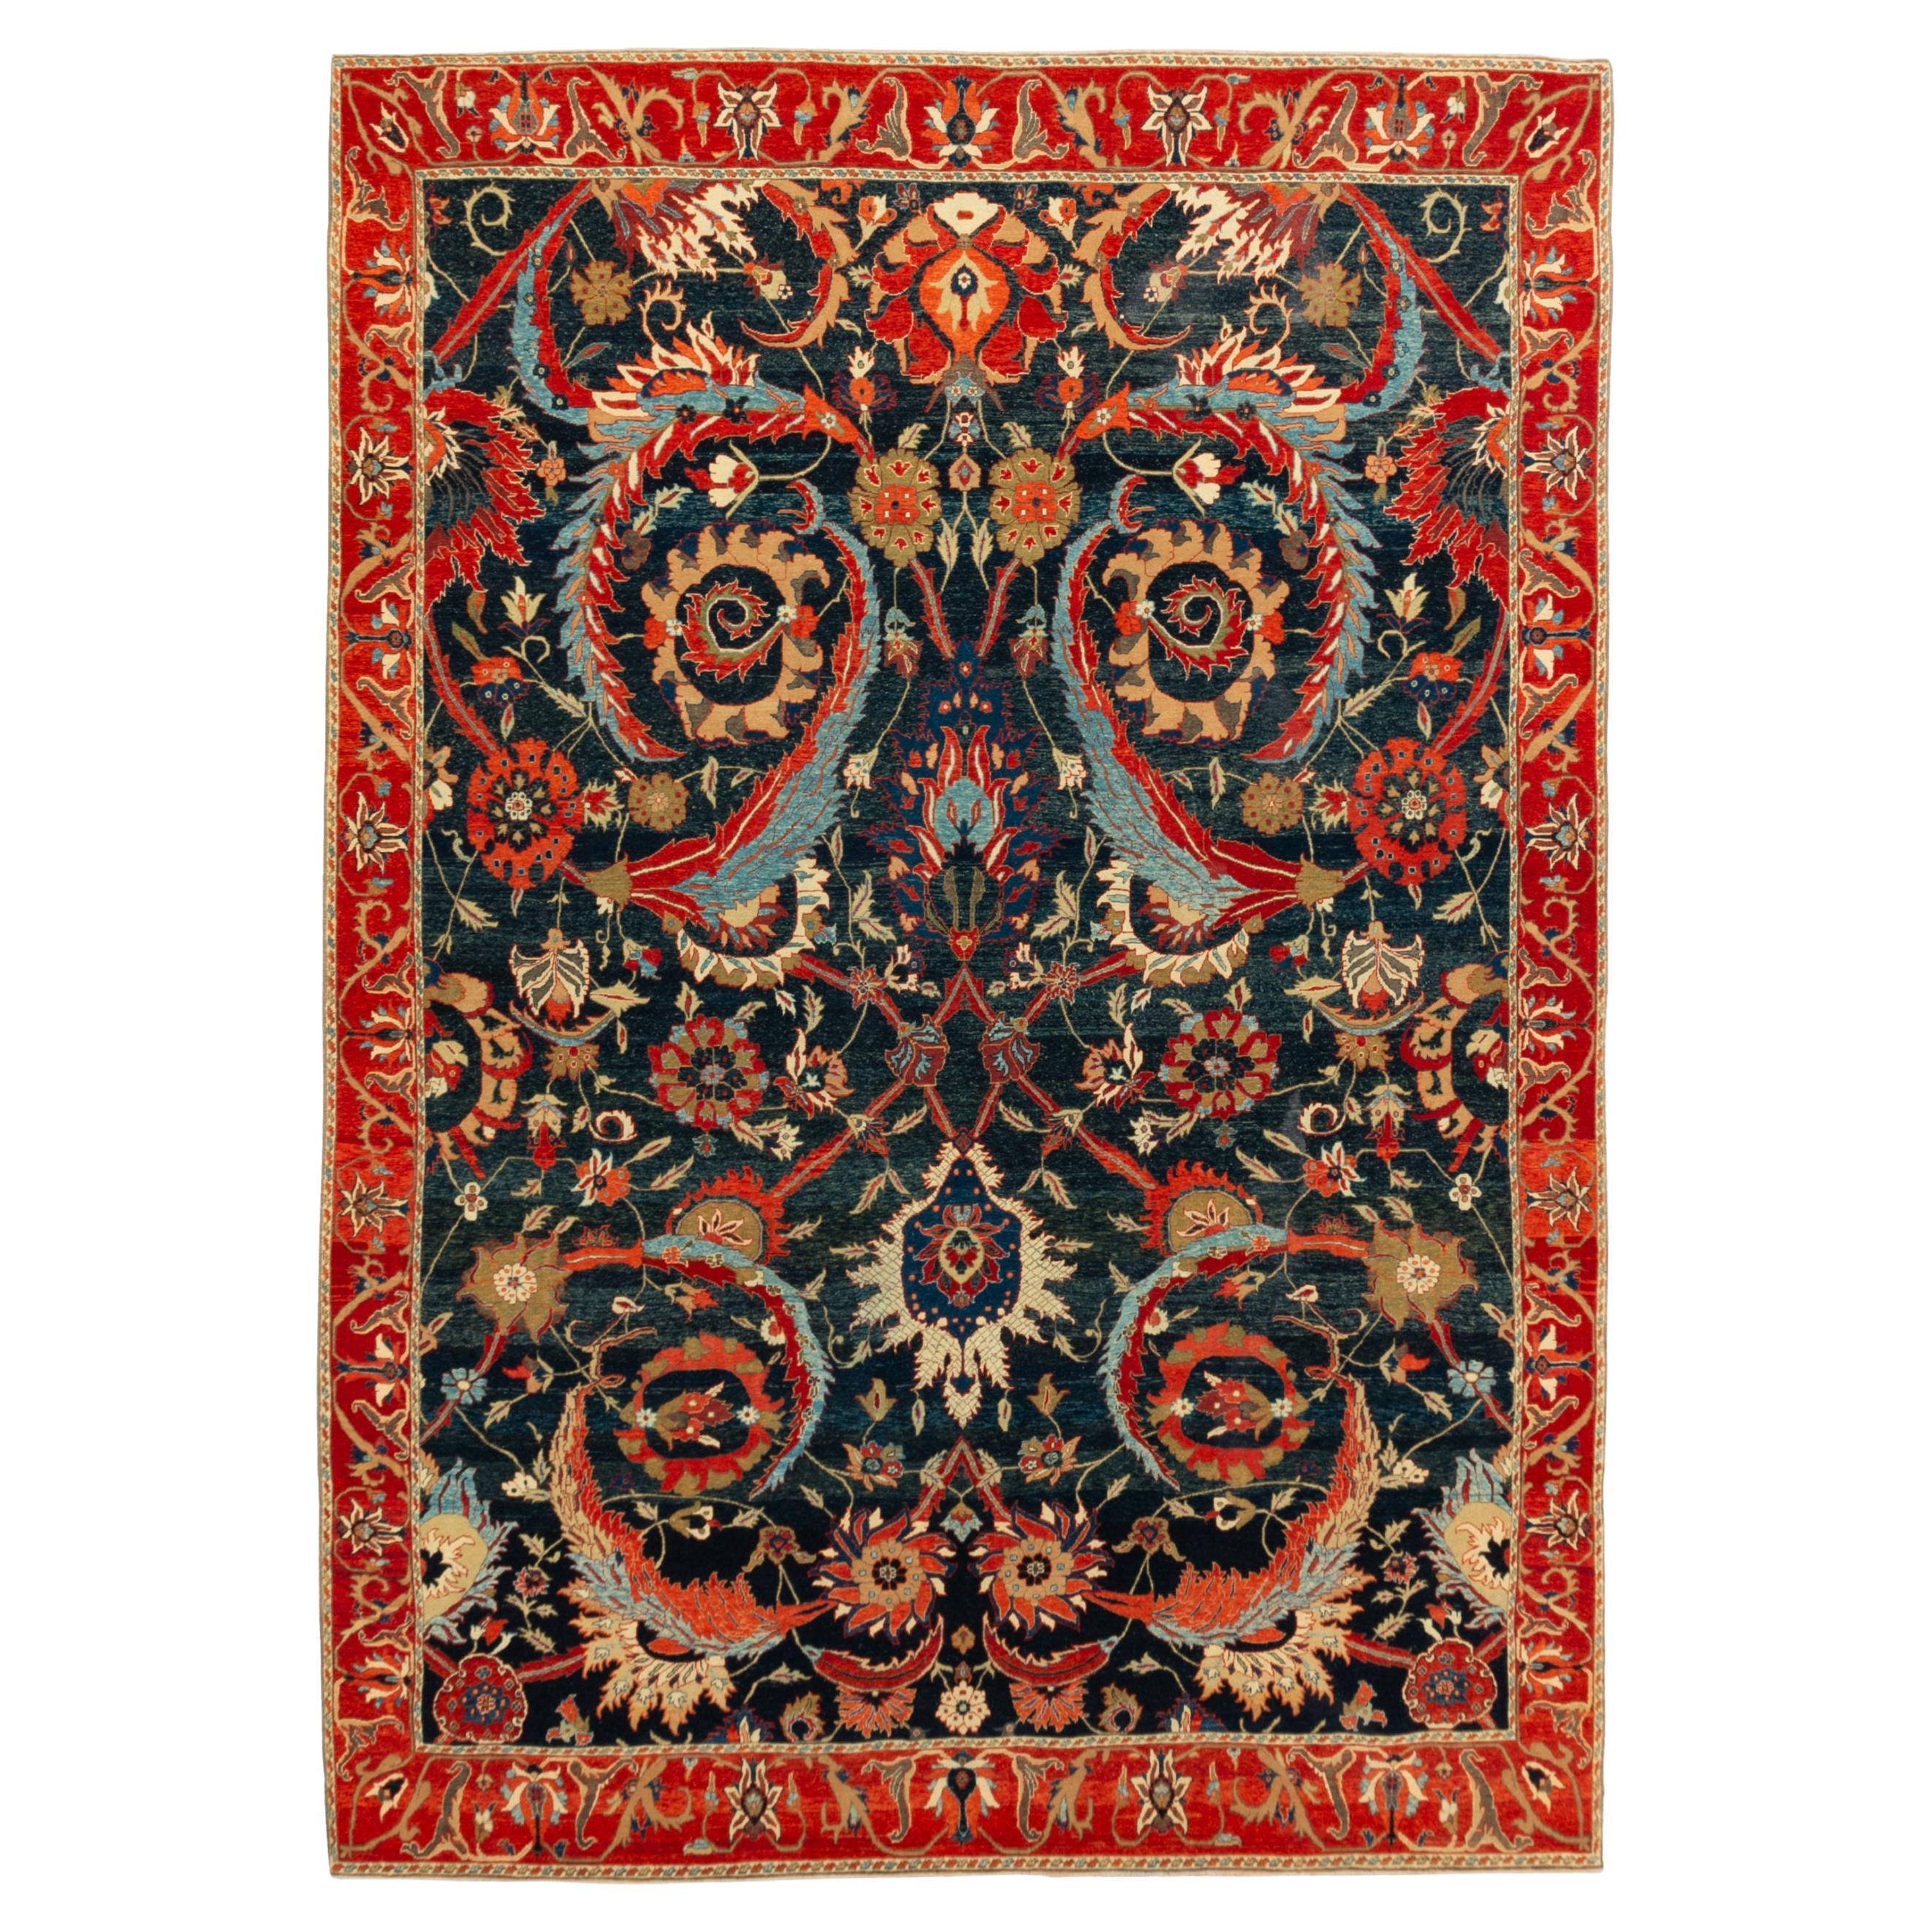 Ararat Rugs Kerman Vase Technique Carpet 17th Century Revival Rug, Natural Dyed For Sale